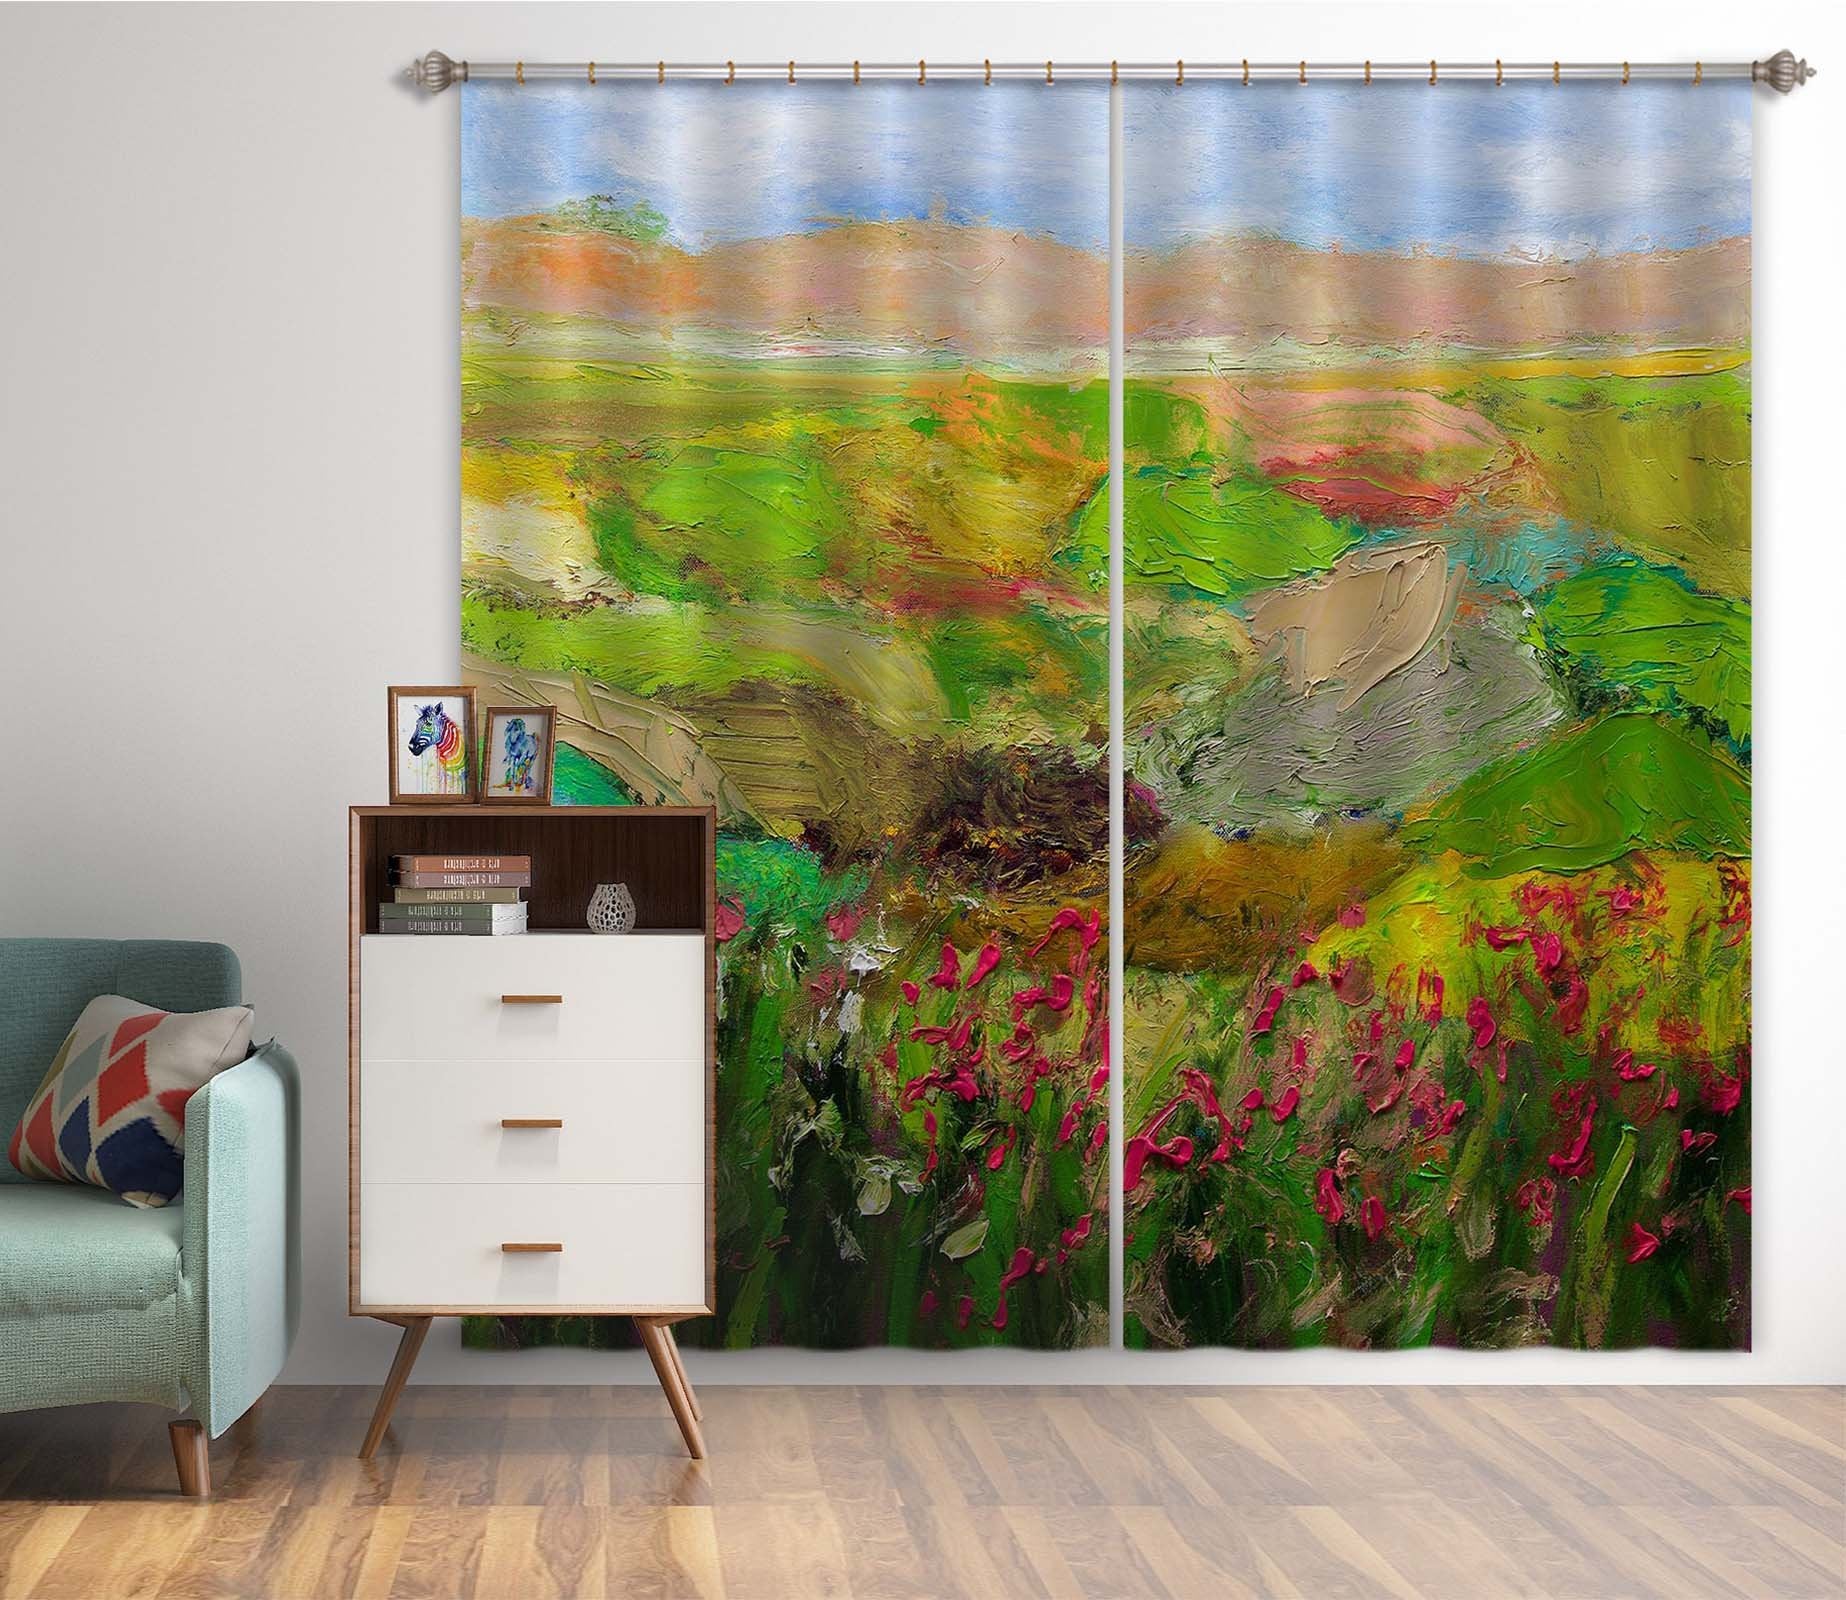 3D Abstract Painting 238 Allan P. Friedlander Curtain Curtains Drapes Wallpaper AJ Wallpaper 